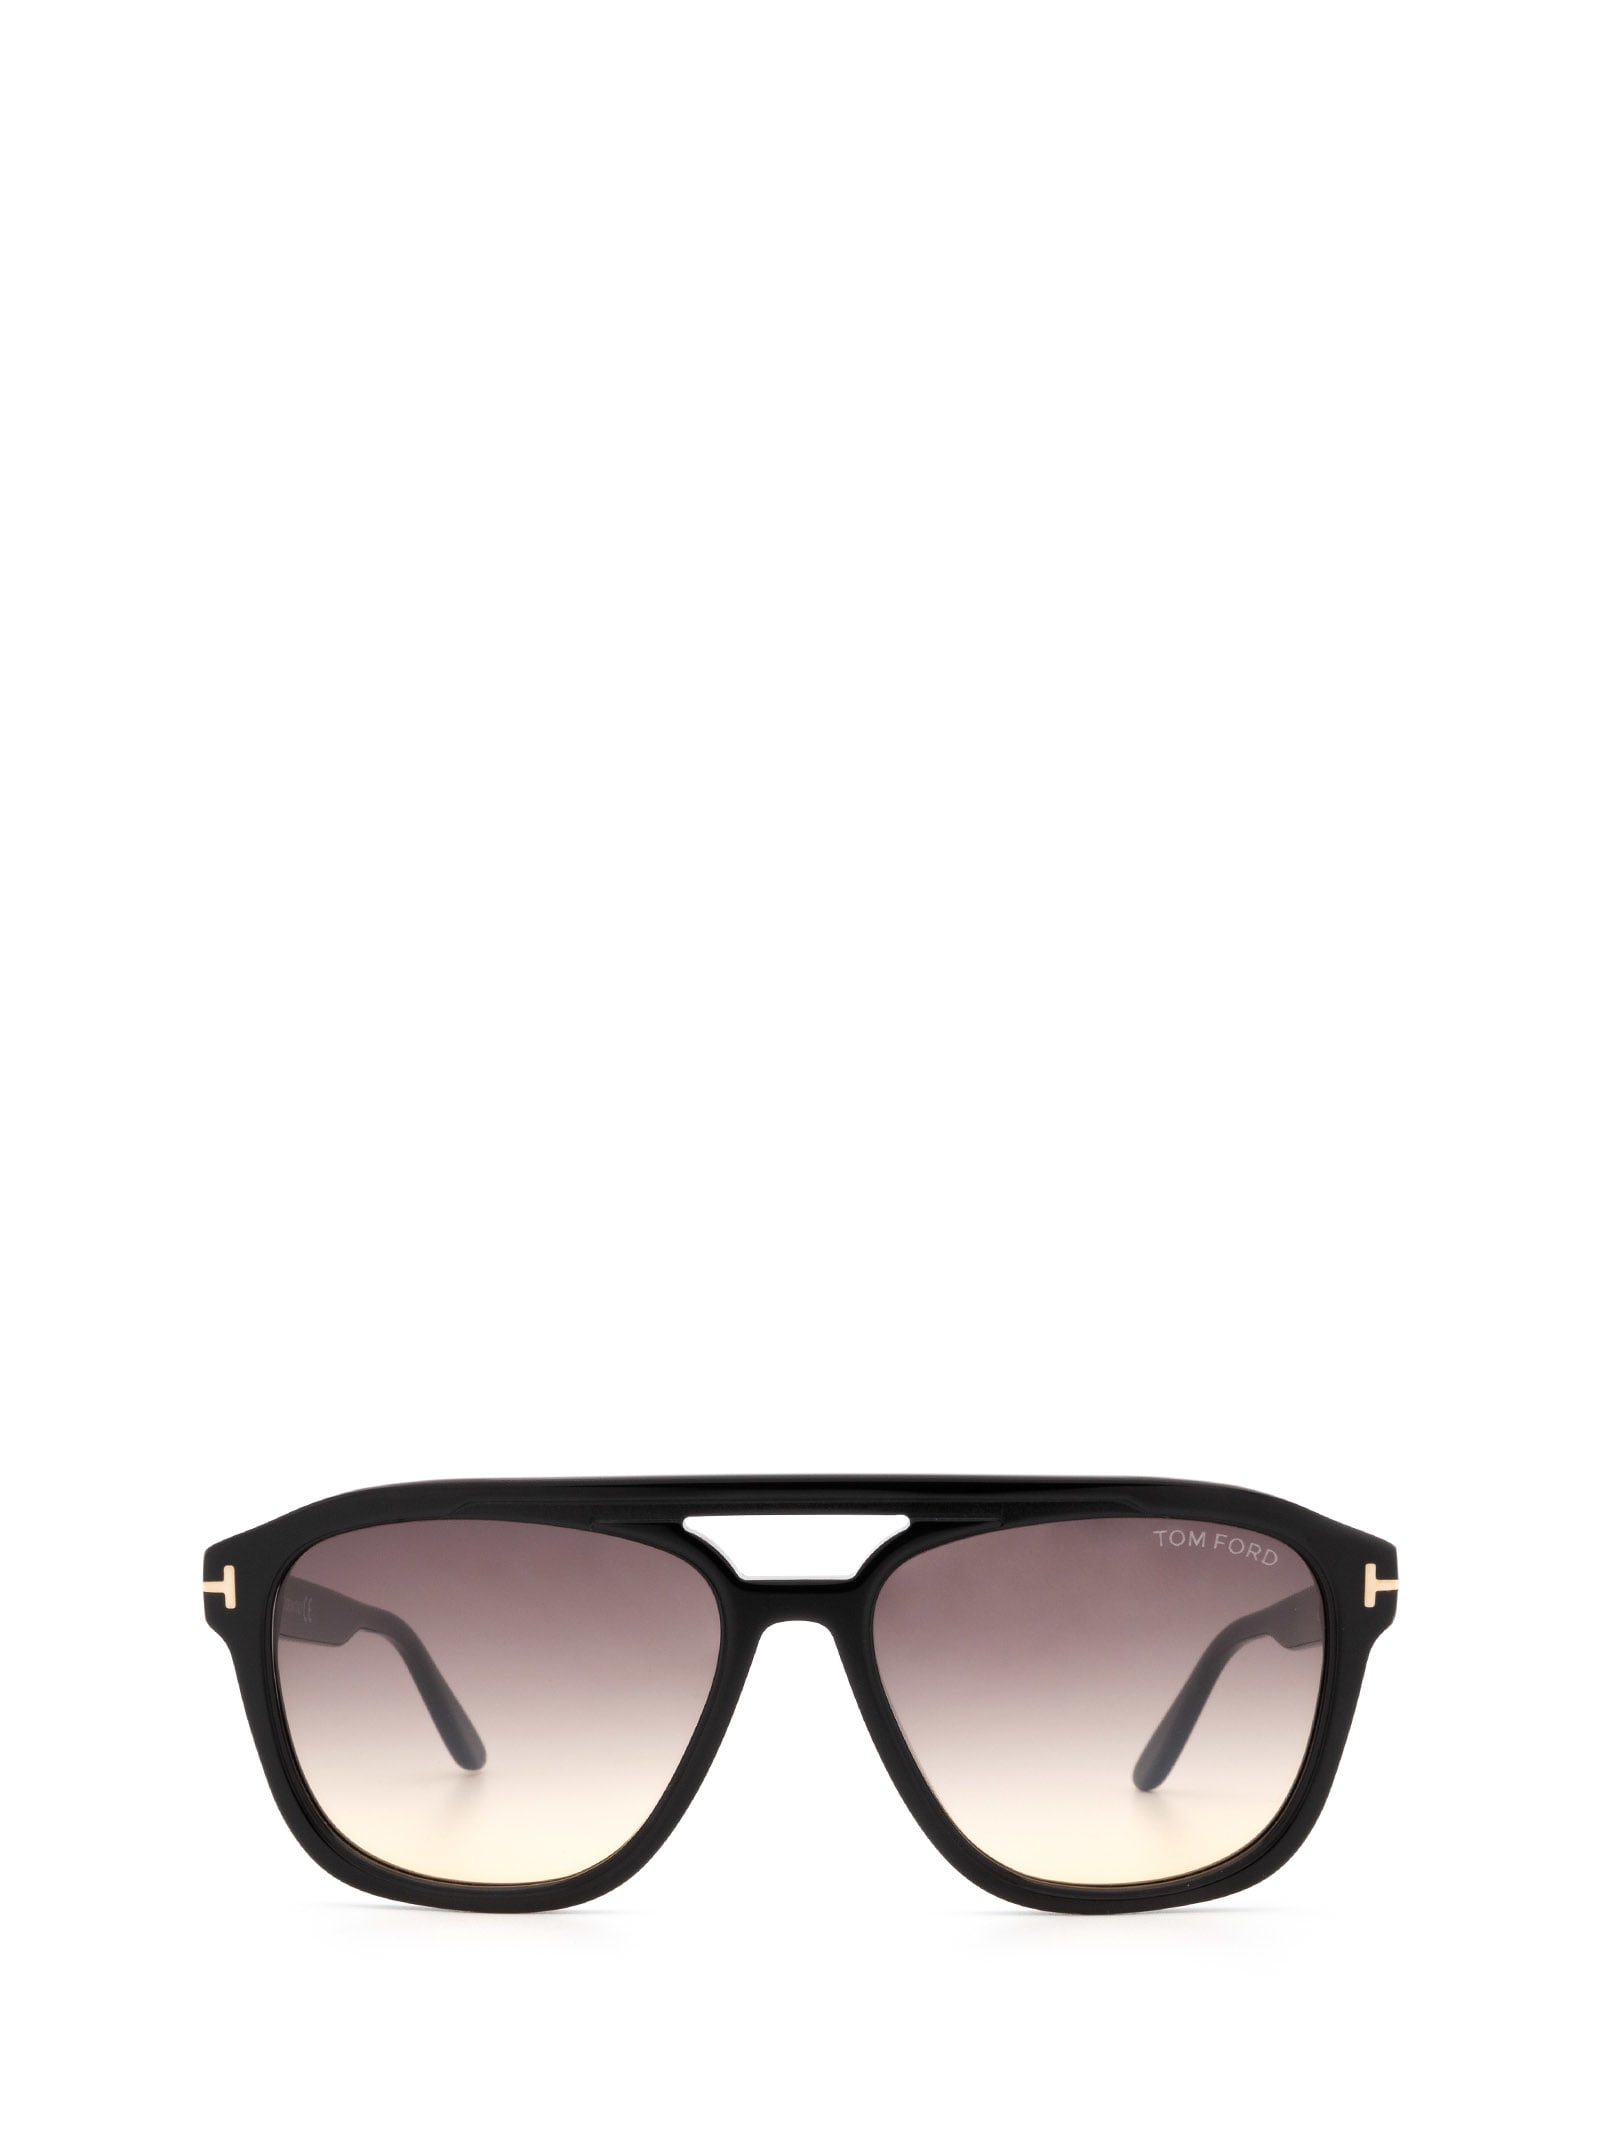 Tom Ford Eyewear Ft0776 Matte Black Sunglasses